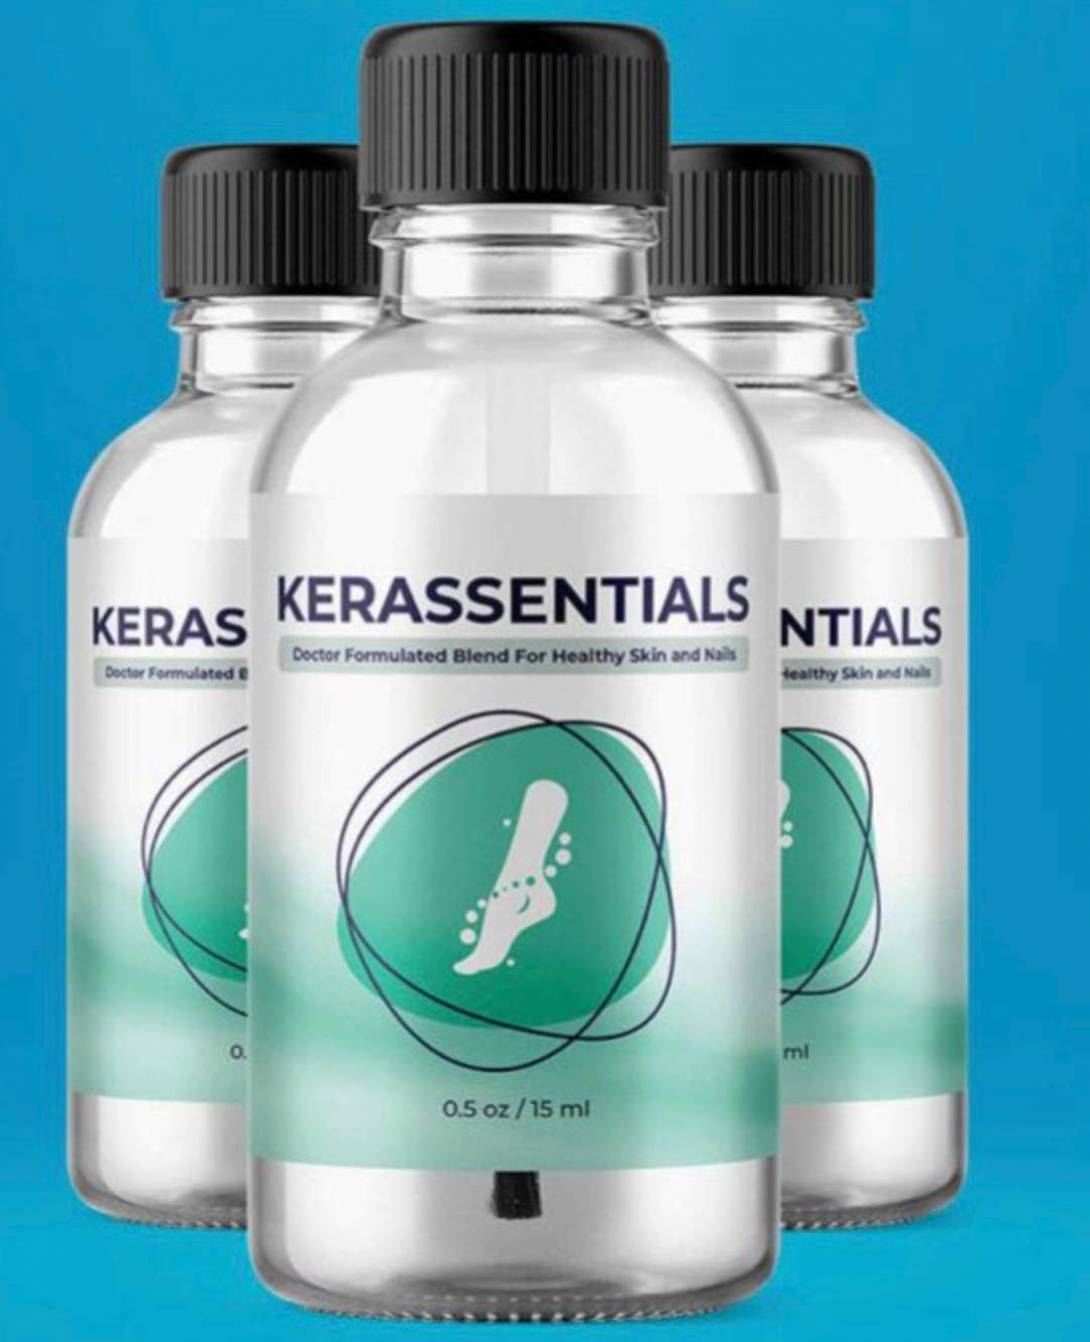 Kerassentials Product Reviews